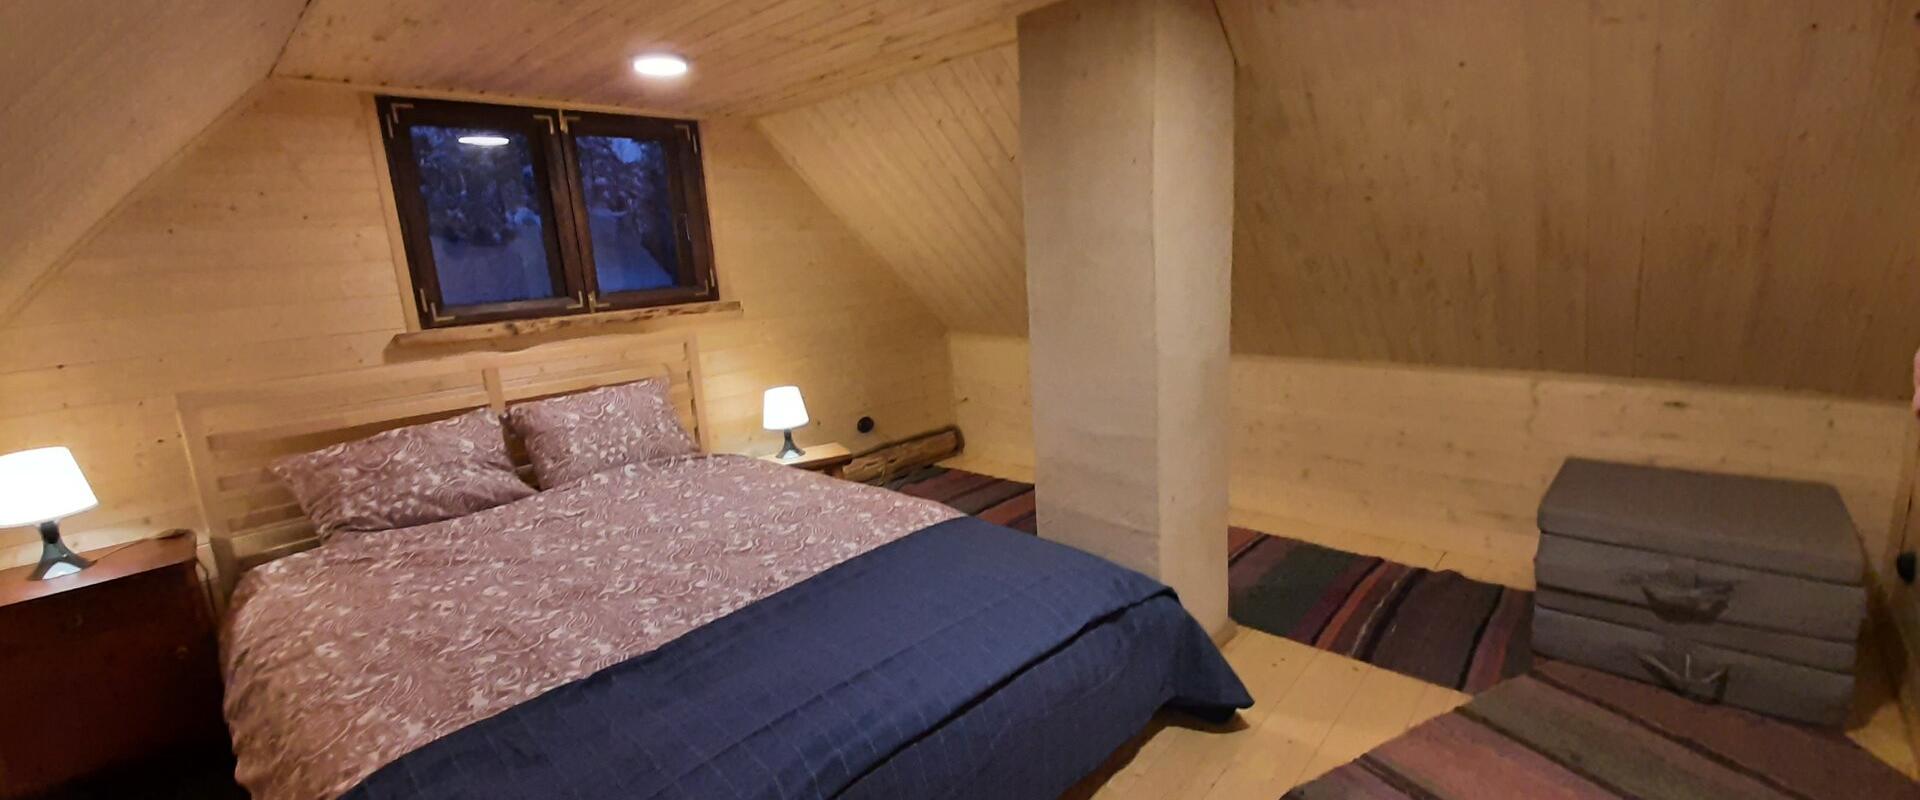 Raistiko sauna, bedroom